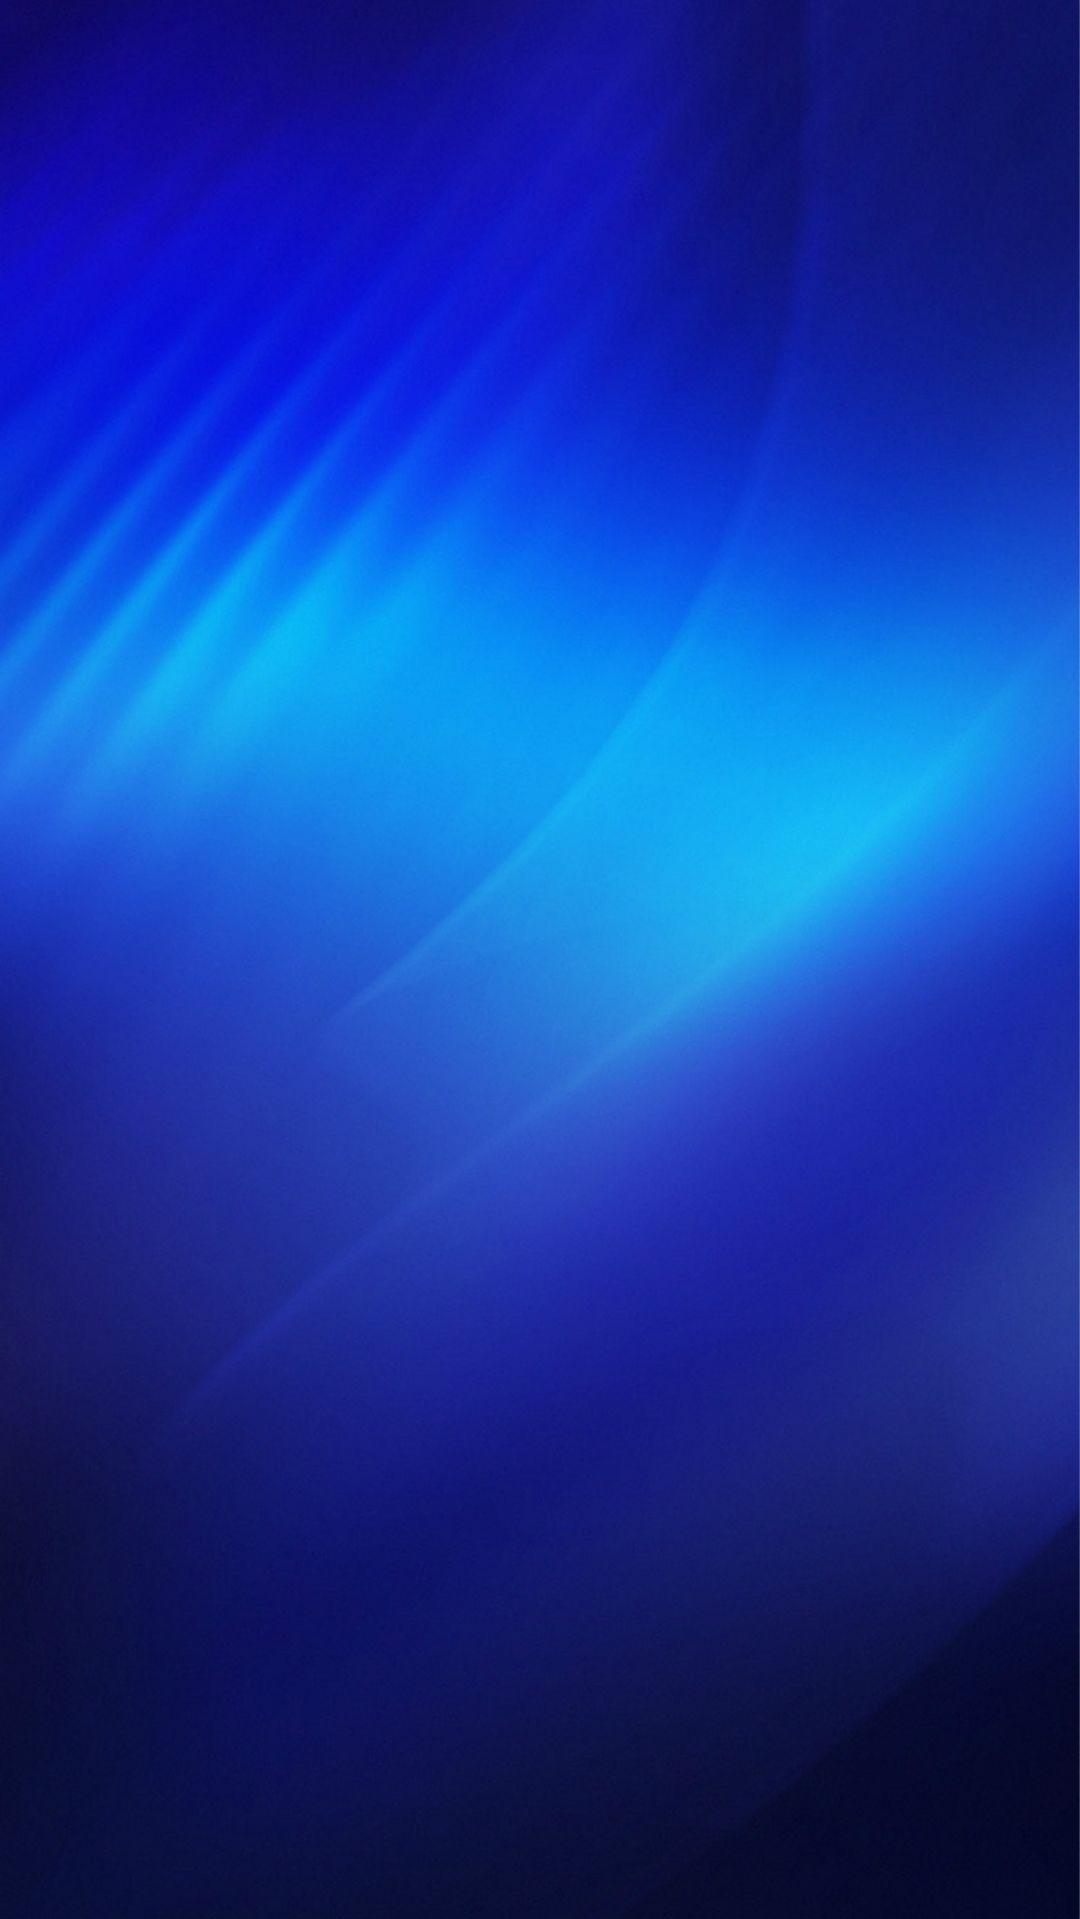 Abstract Blue Light Pattern iPhone Wallpaper